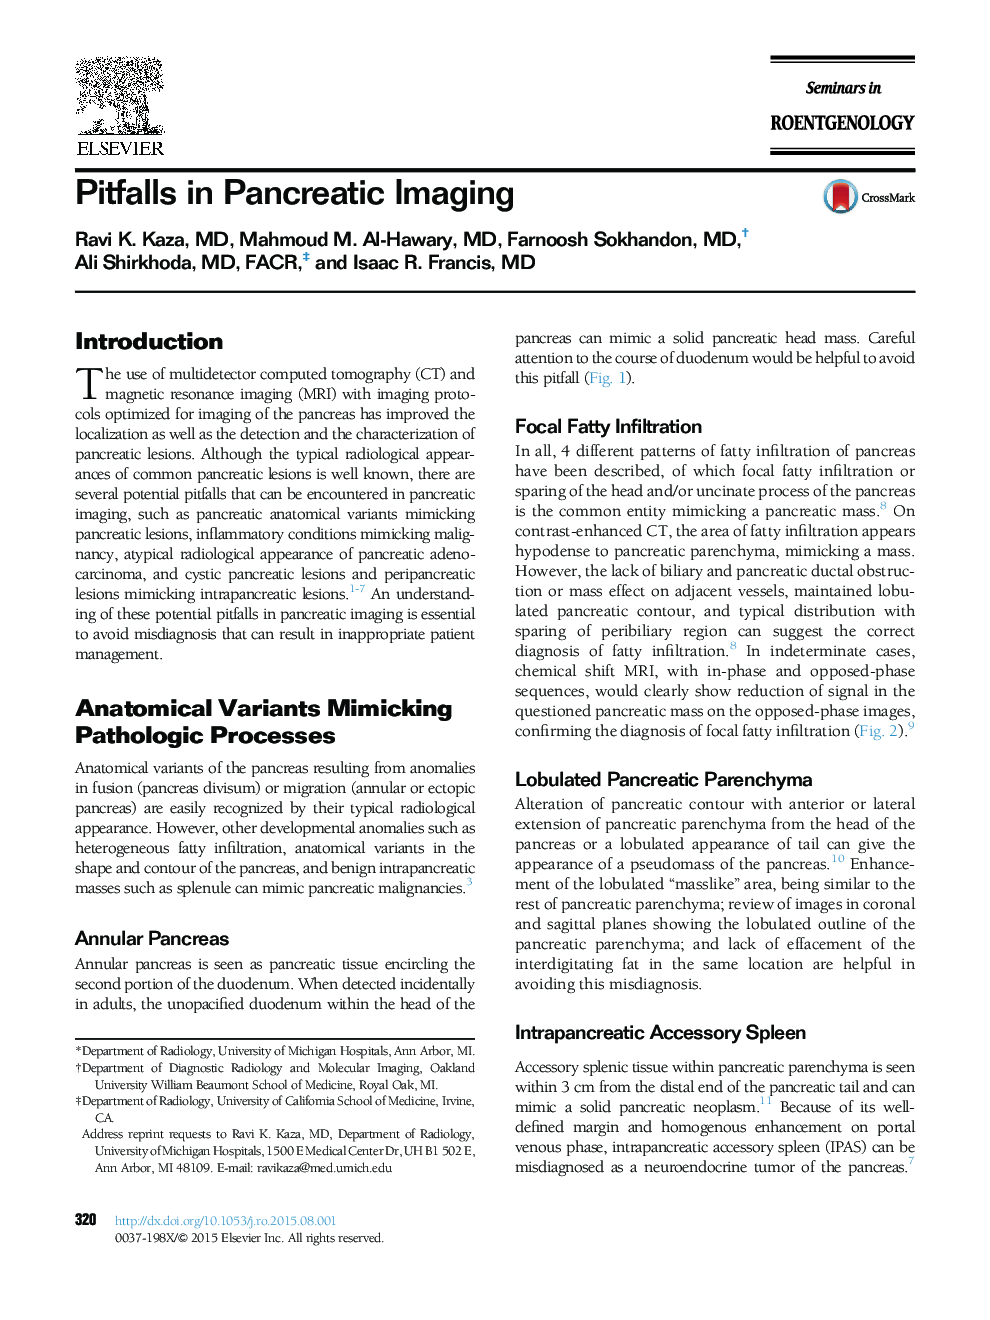 Pitfalls in Pancreatic Imaging